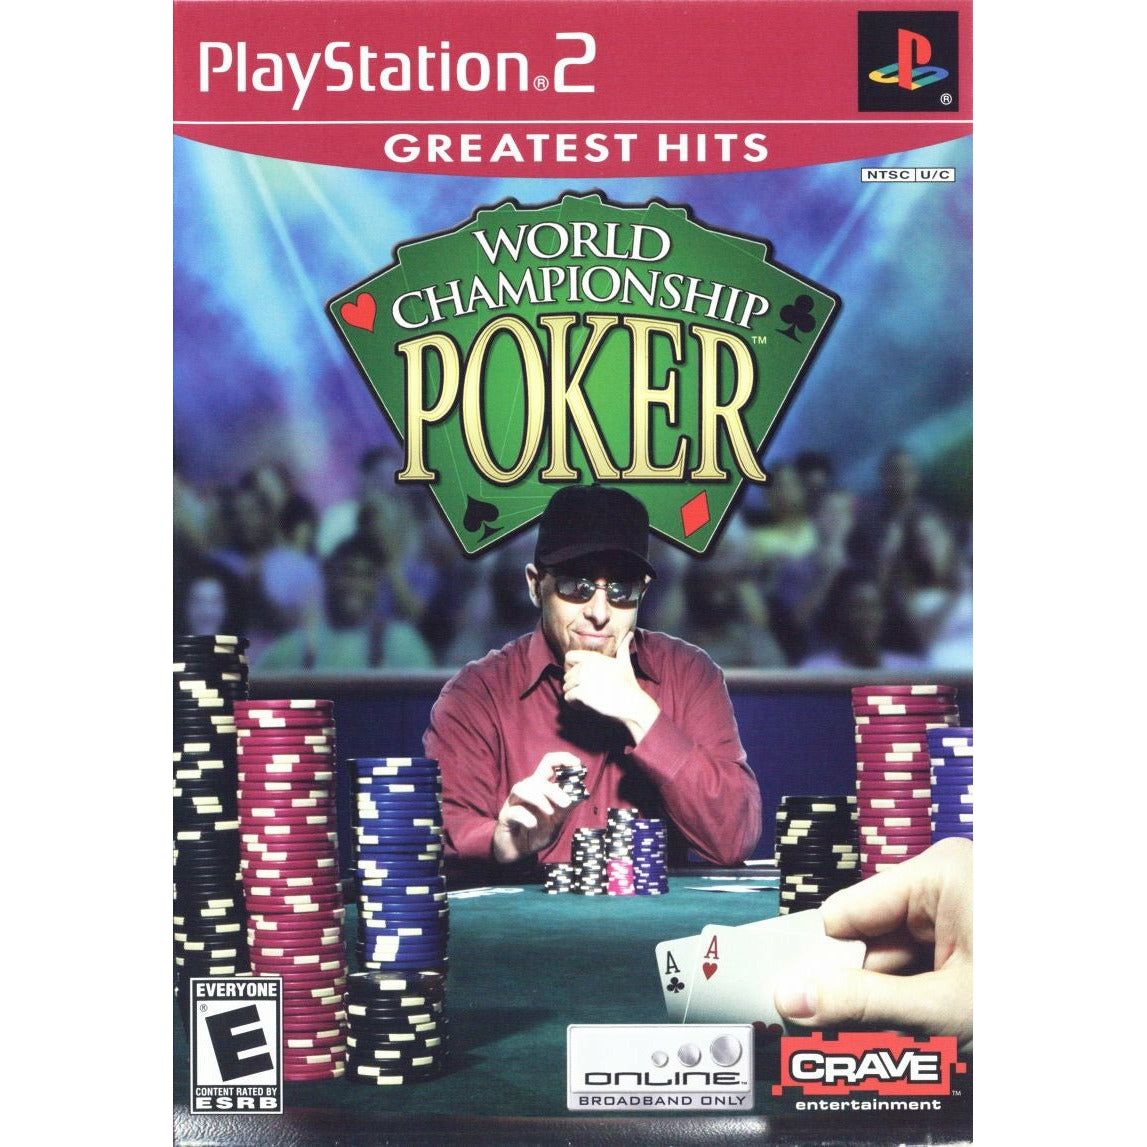 PS2 - World Championship Poker (Greatest Hits)